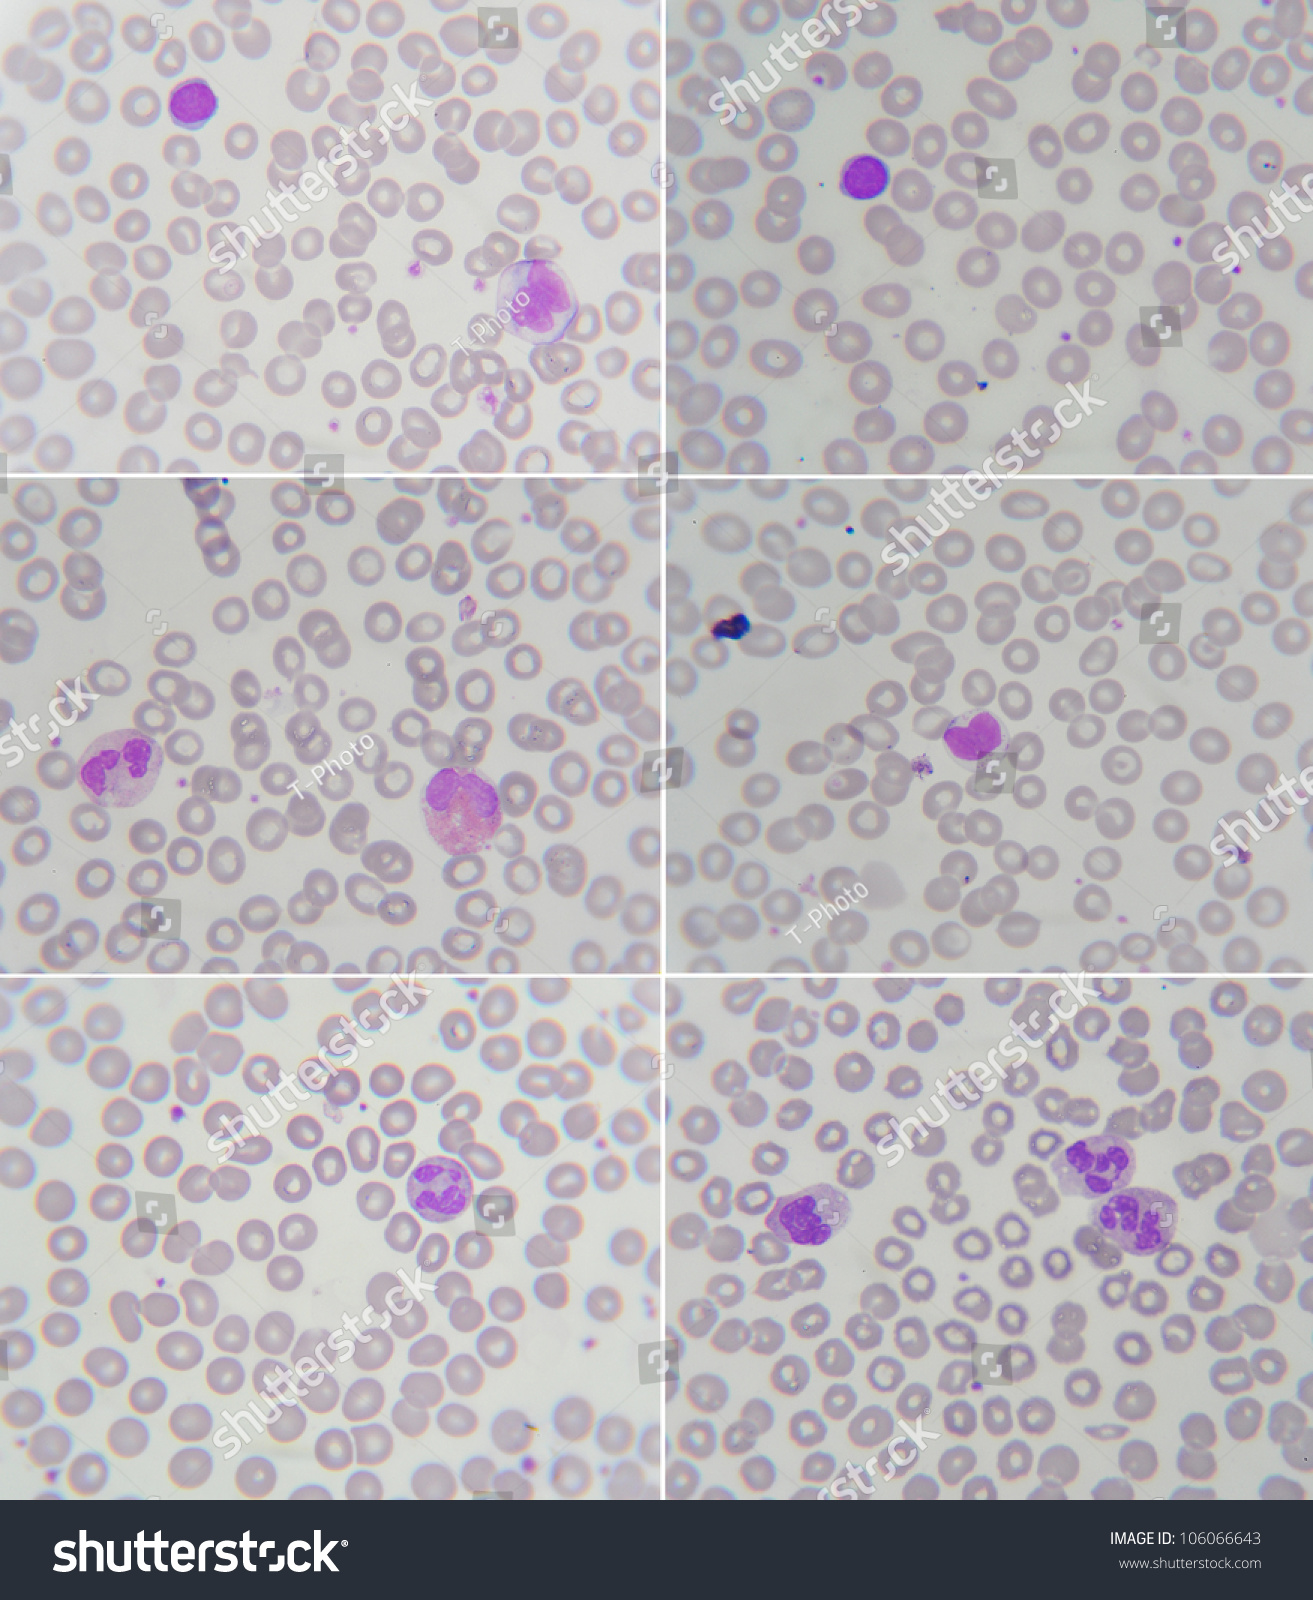 Package Of Blood Smear Show Neutrophil , Lymphocyte , Monocyte ...